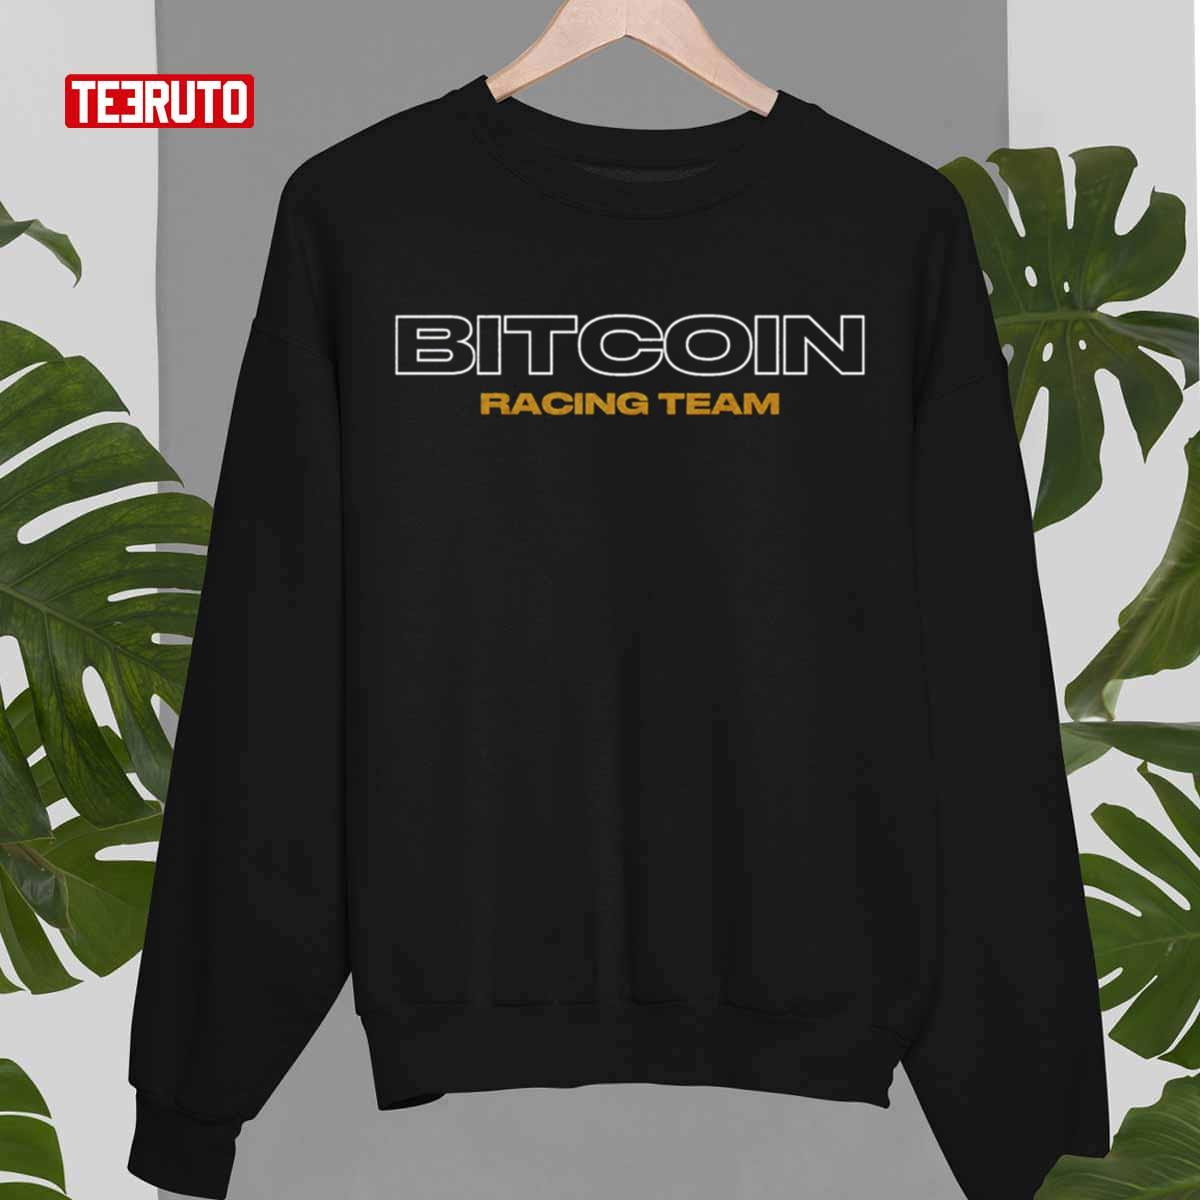 Bitcoin Racing Team Unisex T-Shirt